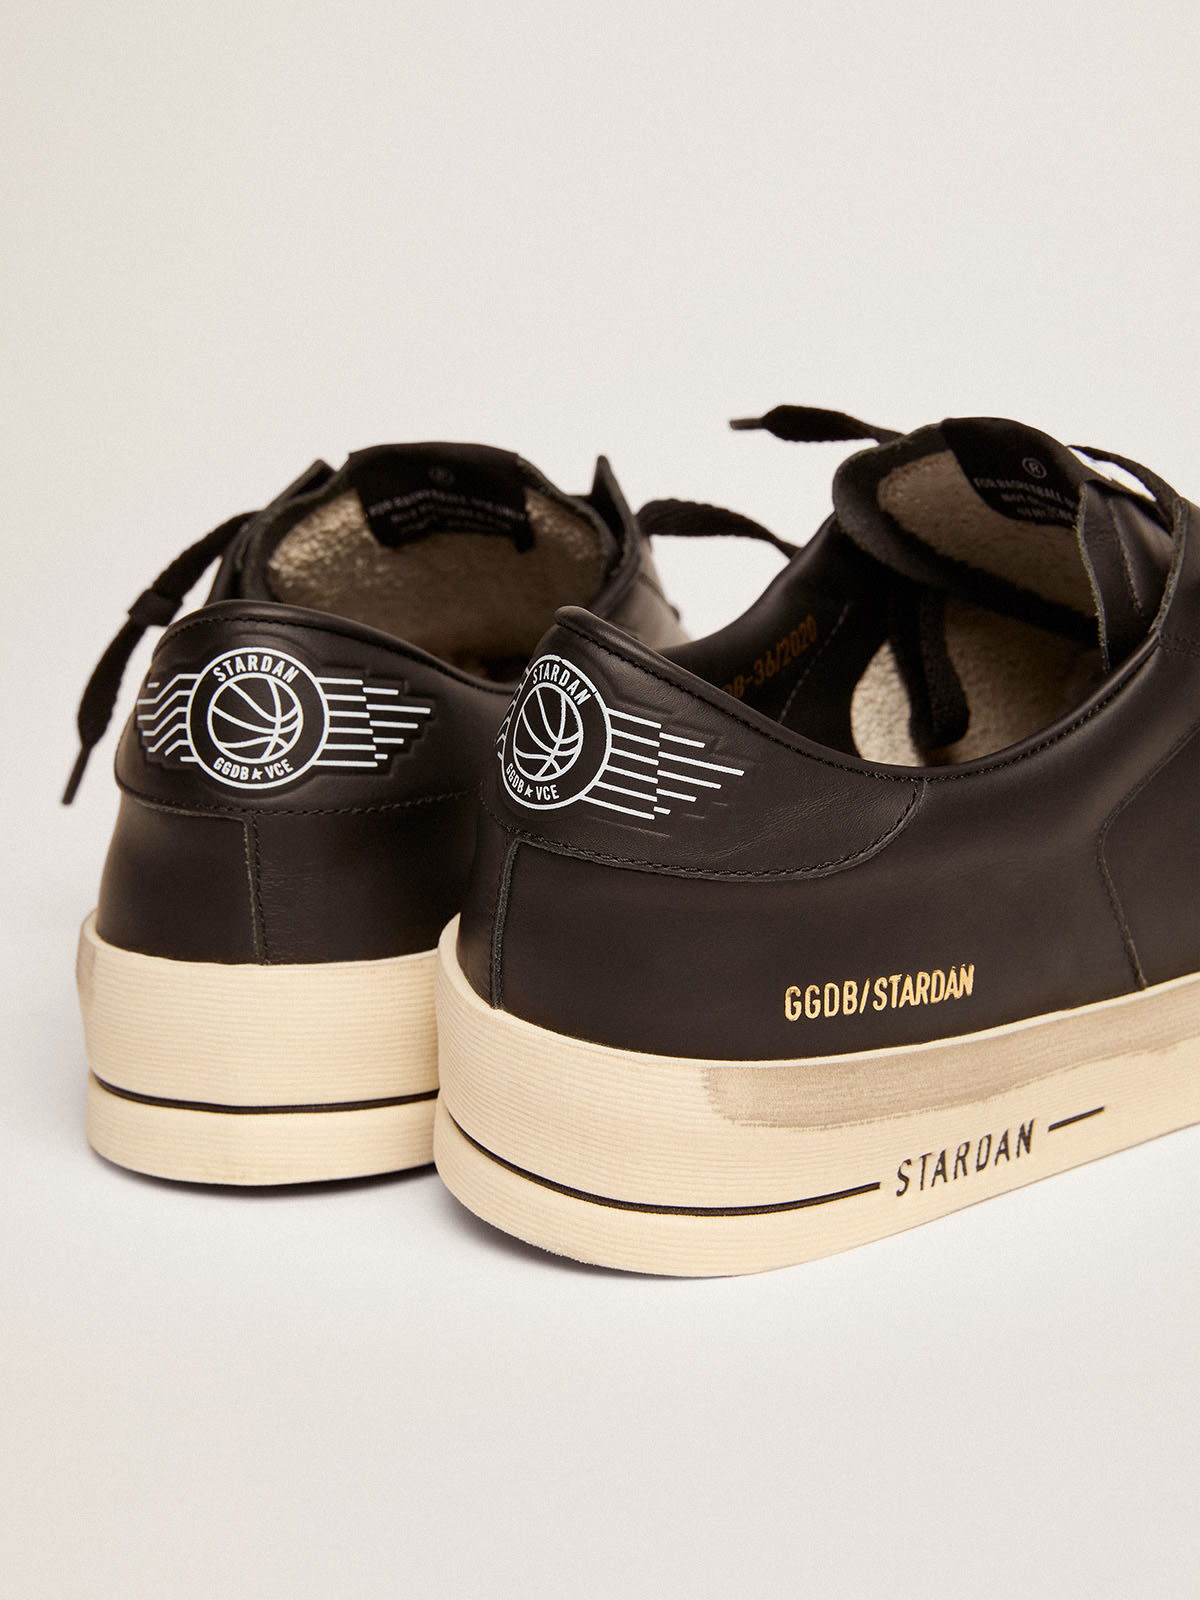 Golden Goose - Sneakers Stardan aus Leder in Total Black mit Vintage-Behandlung in 